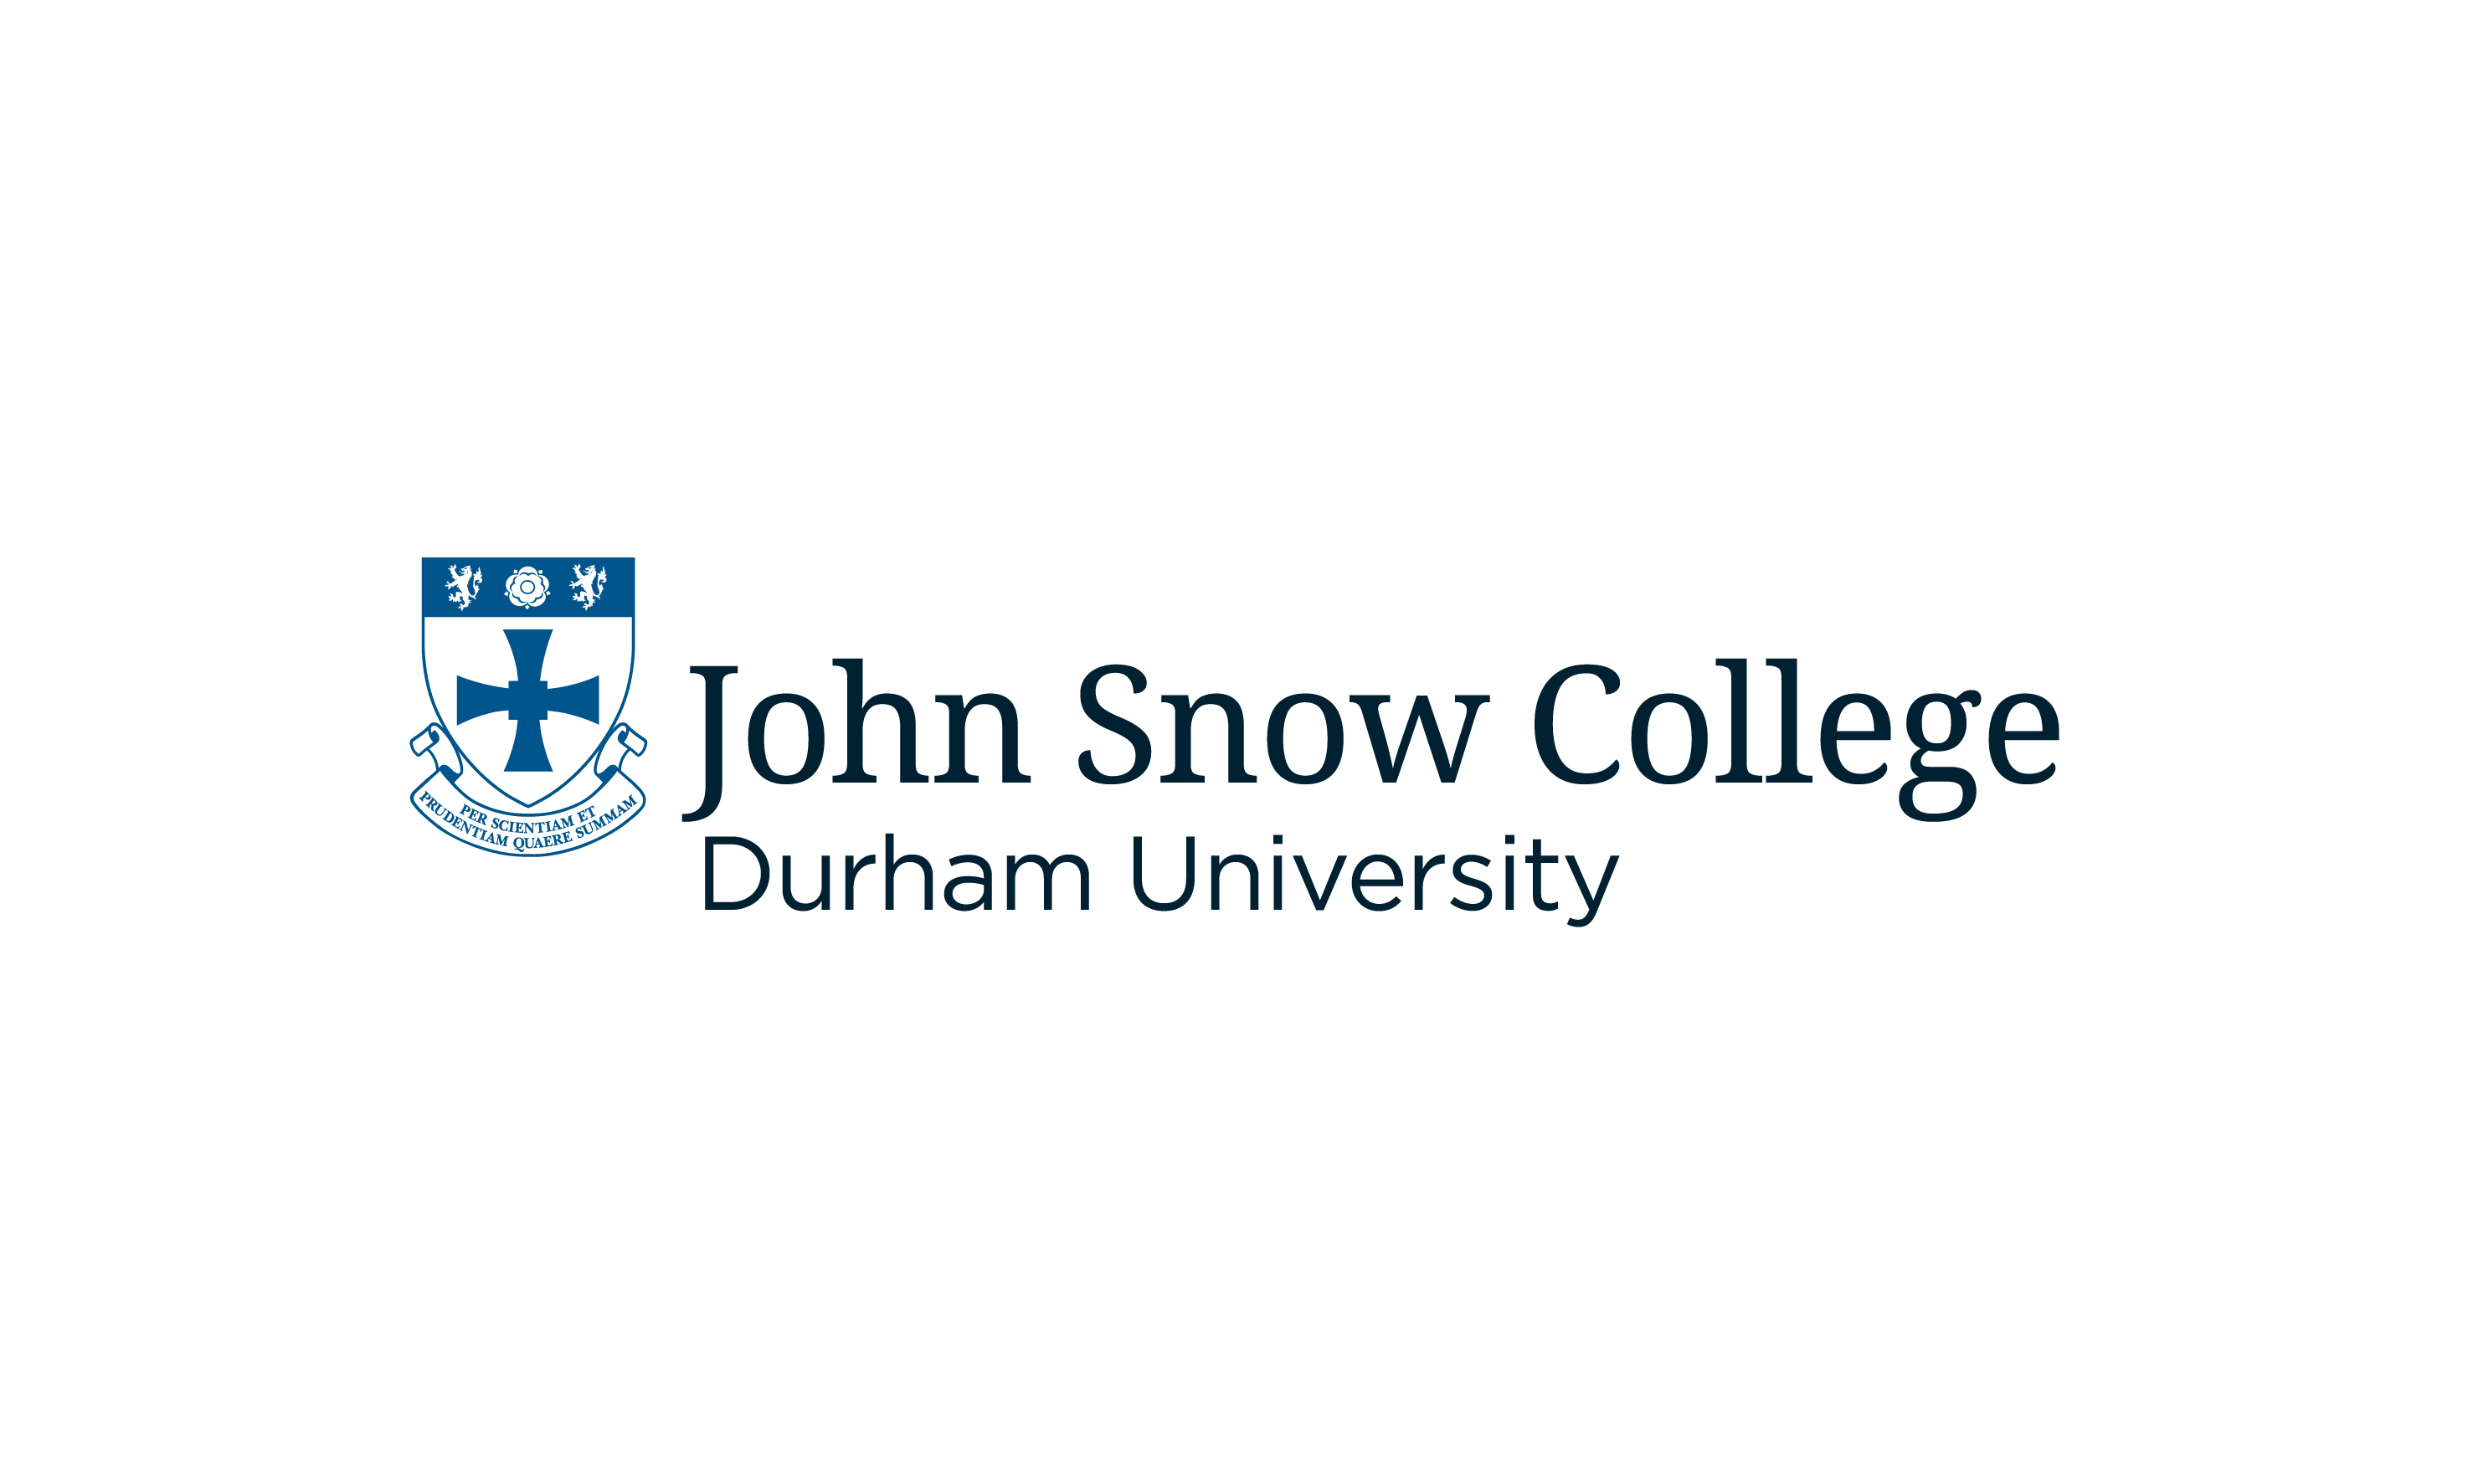 John Snow College tie - NON JCR member